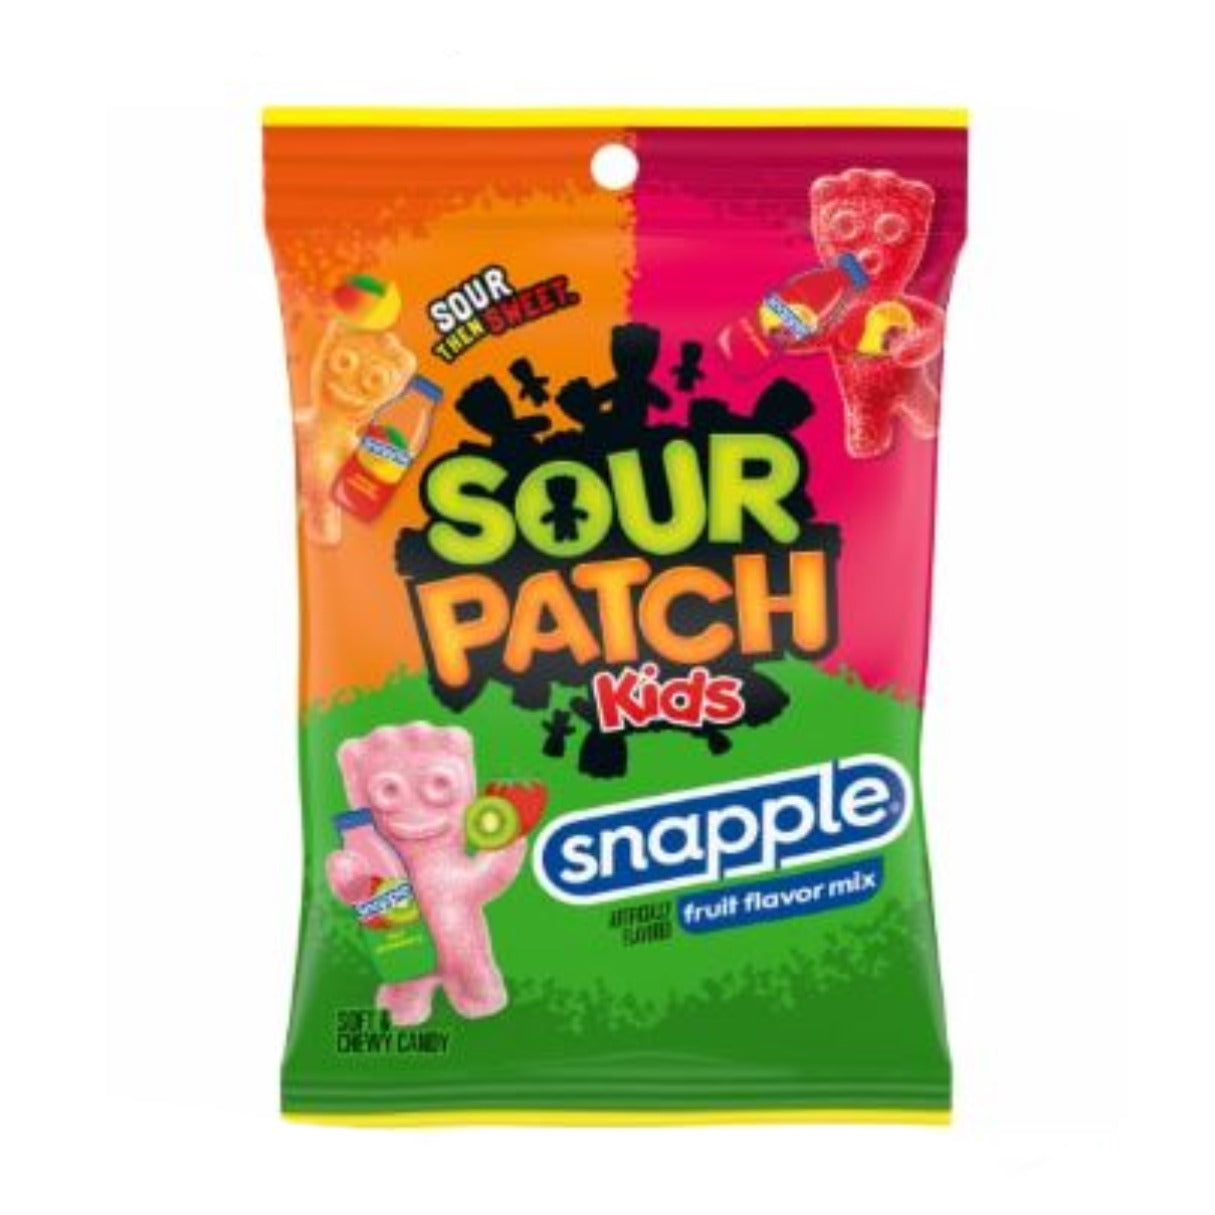 Sour Patch Kids Snapple 3.61oz - 12ct